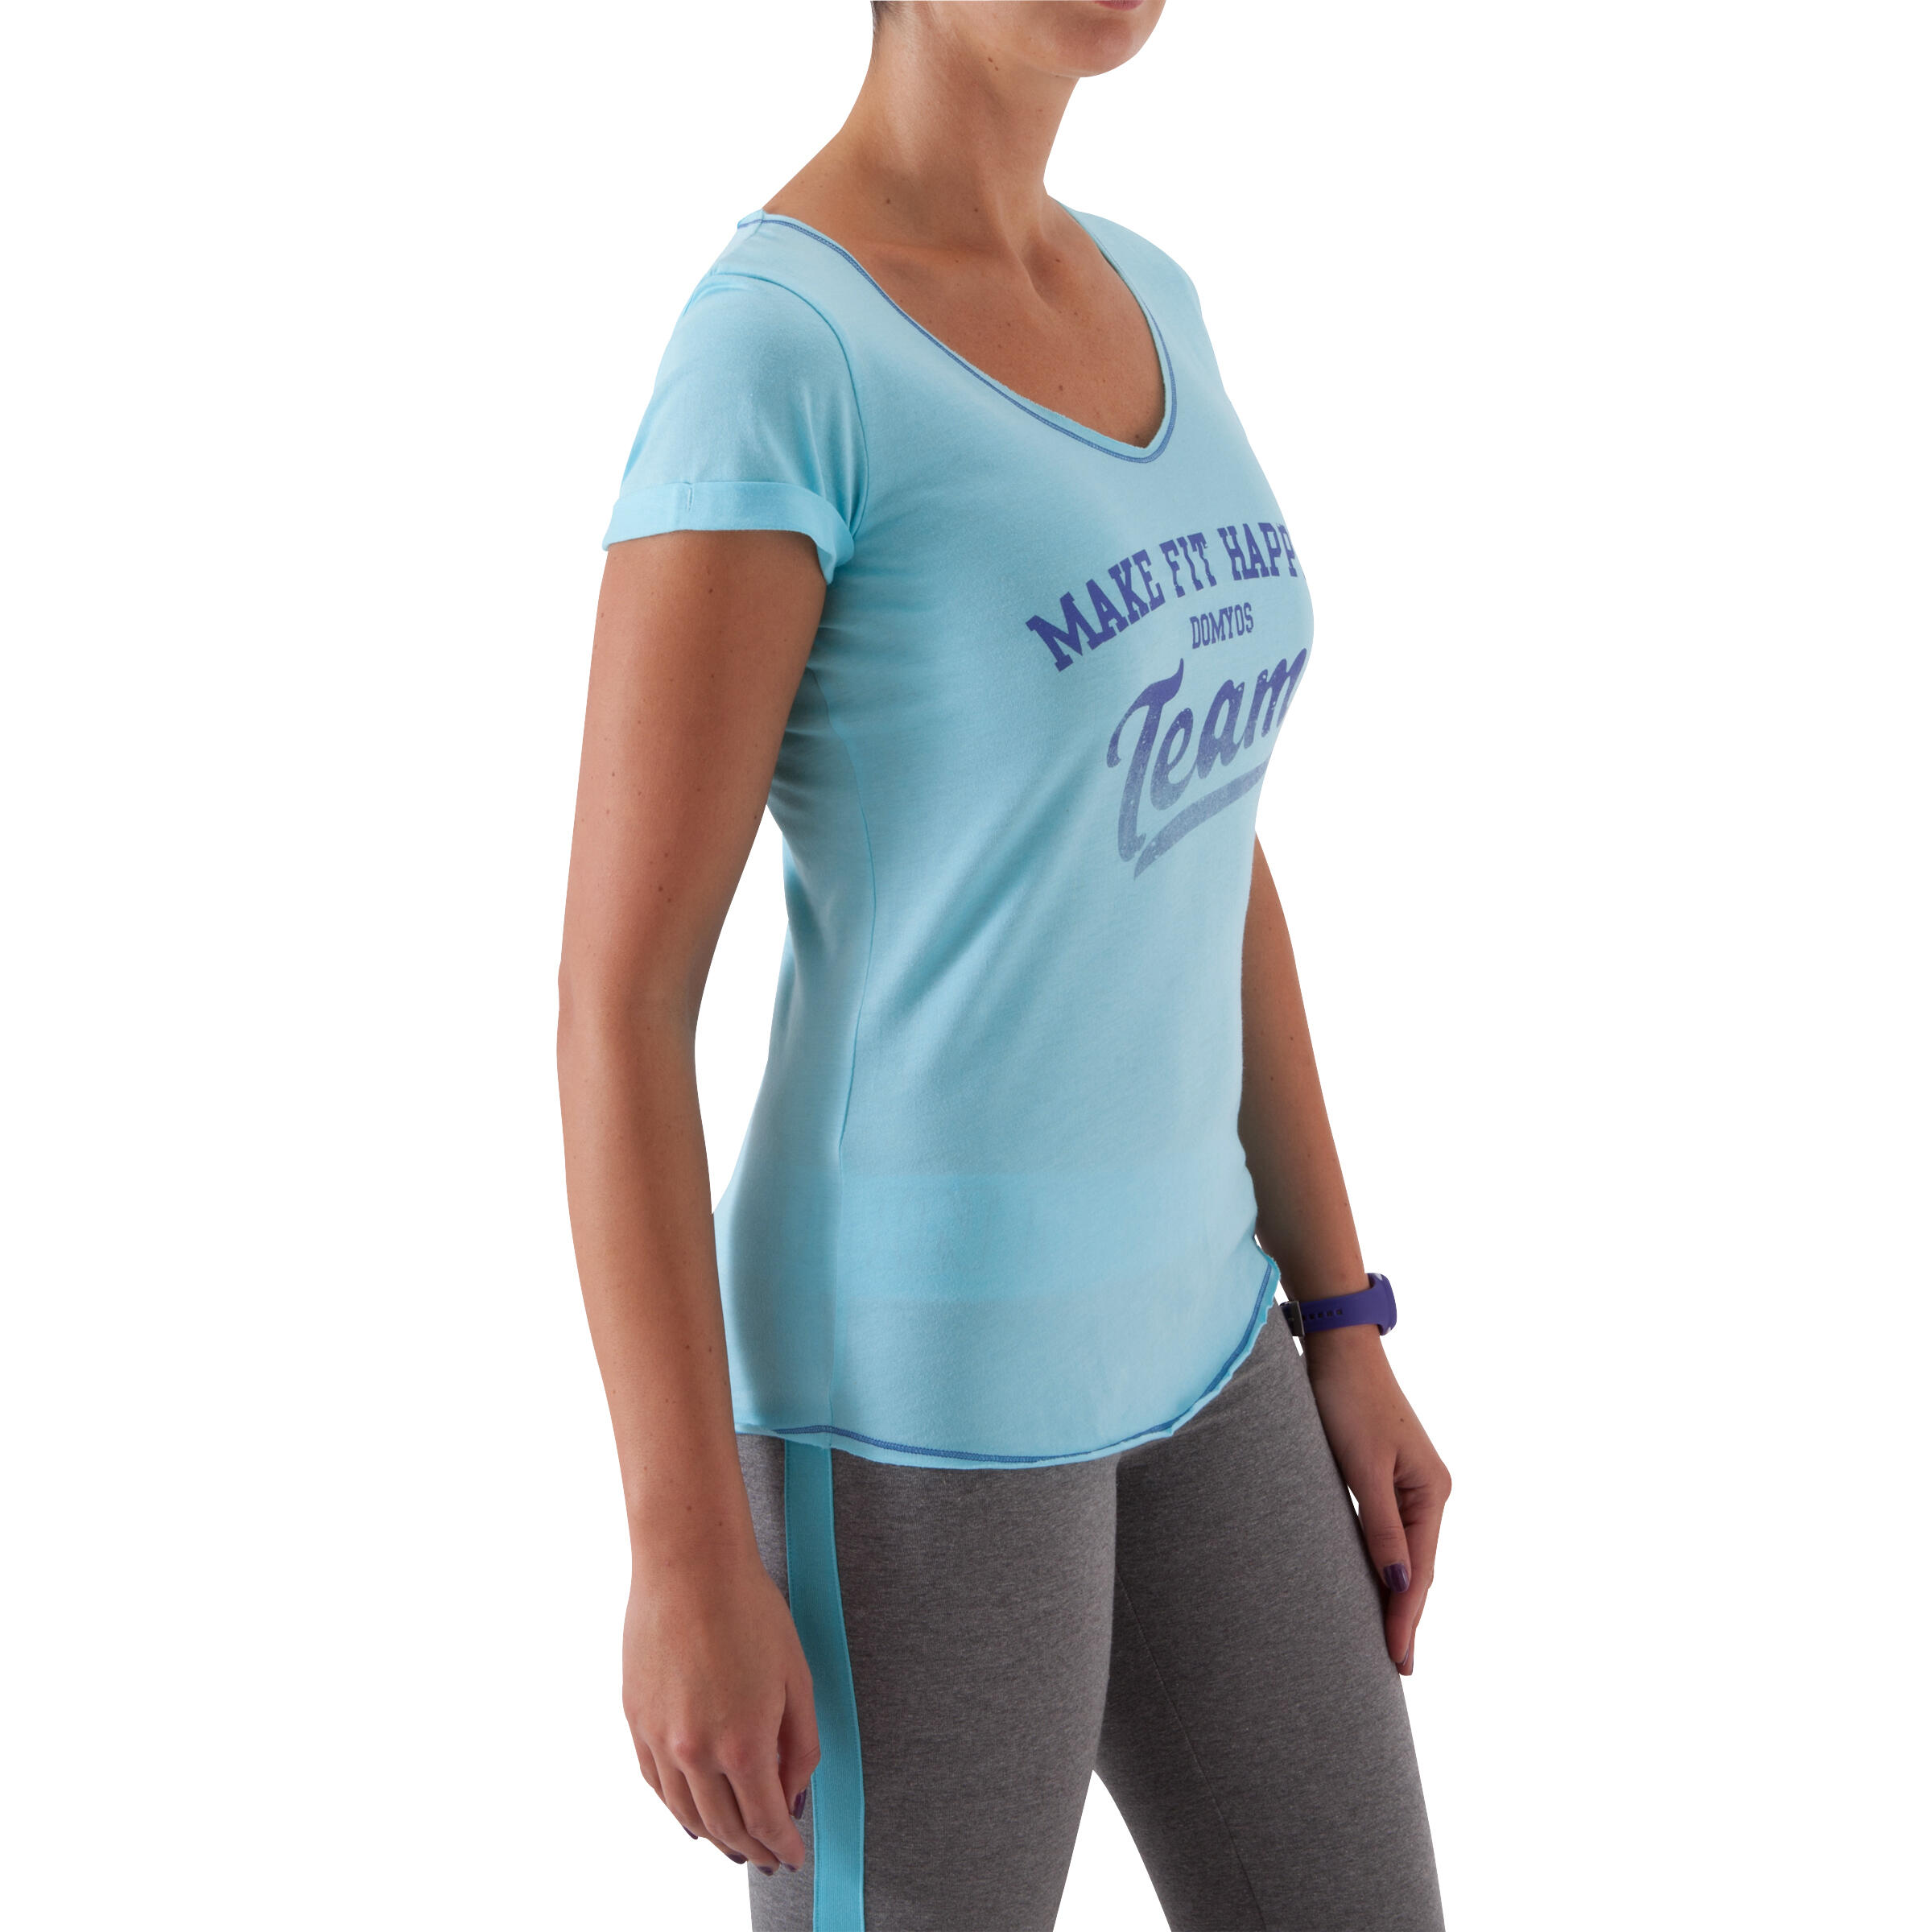 Women's Short-Sleeved Fitness Print T-shirt - Light Blue 4/11